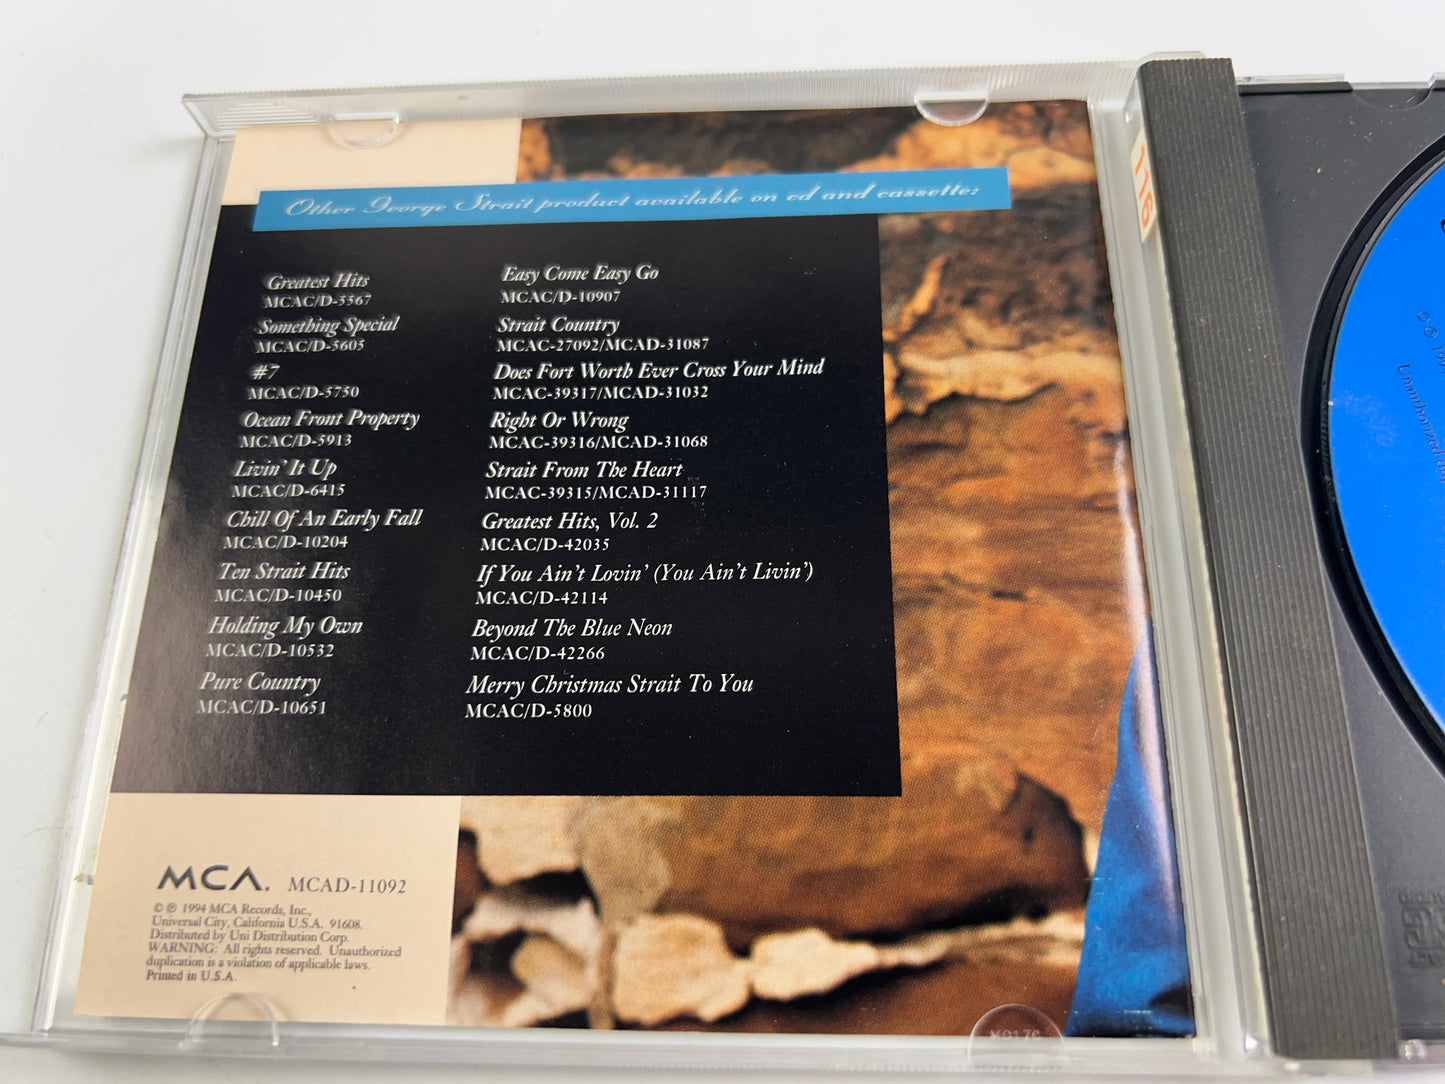 George Strait - Lead On - MCA Records Music CD